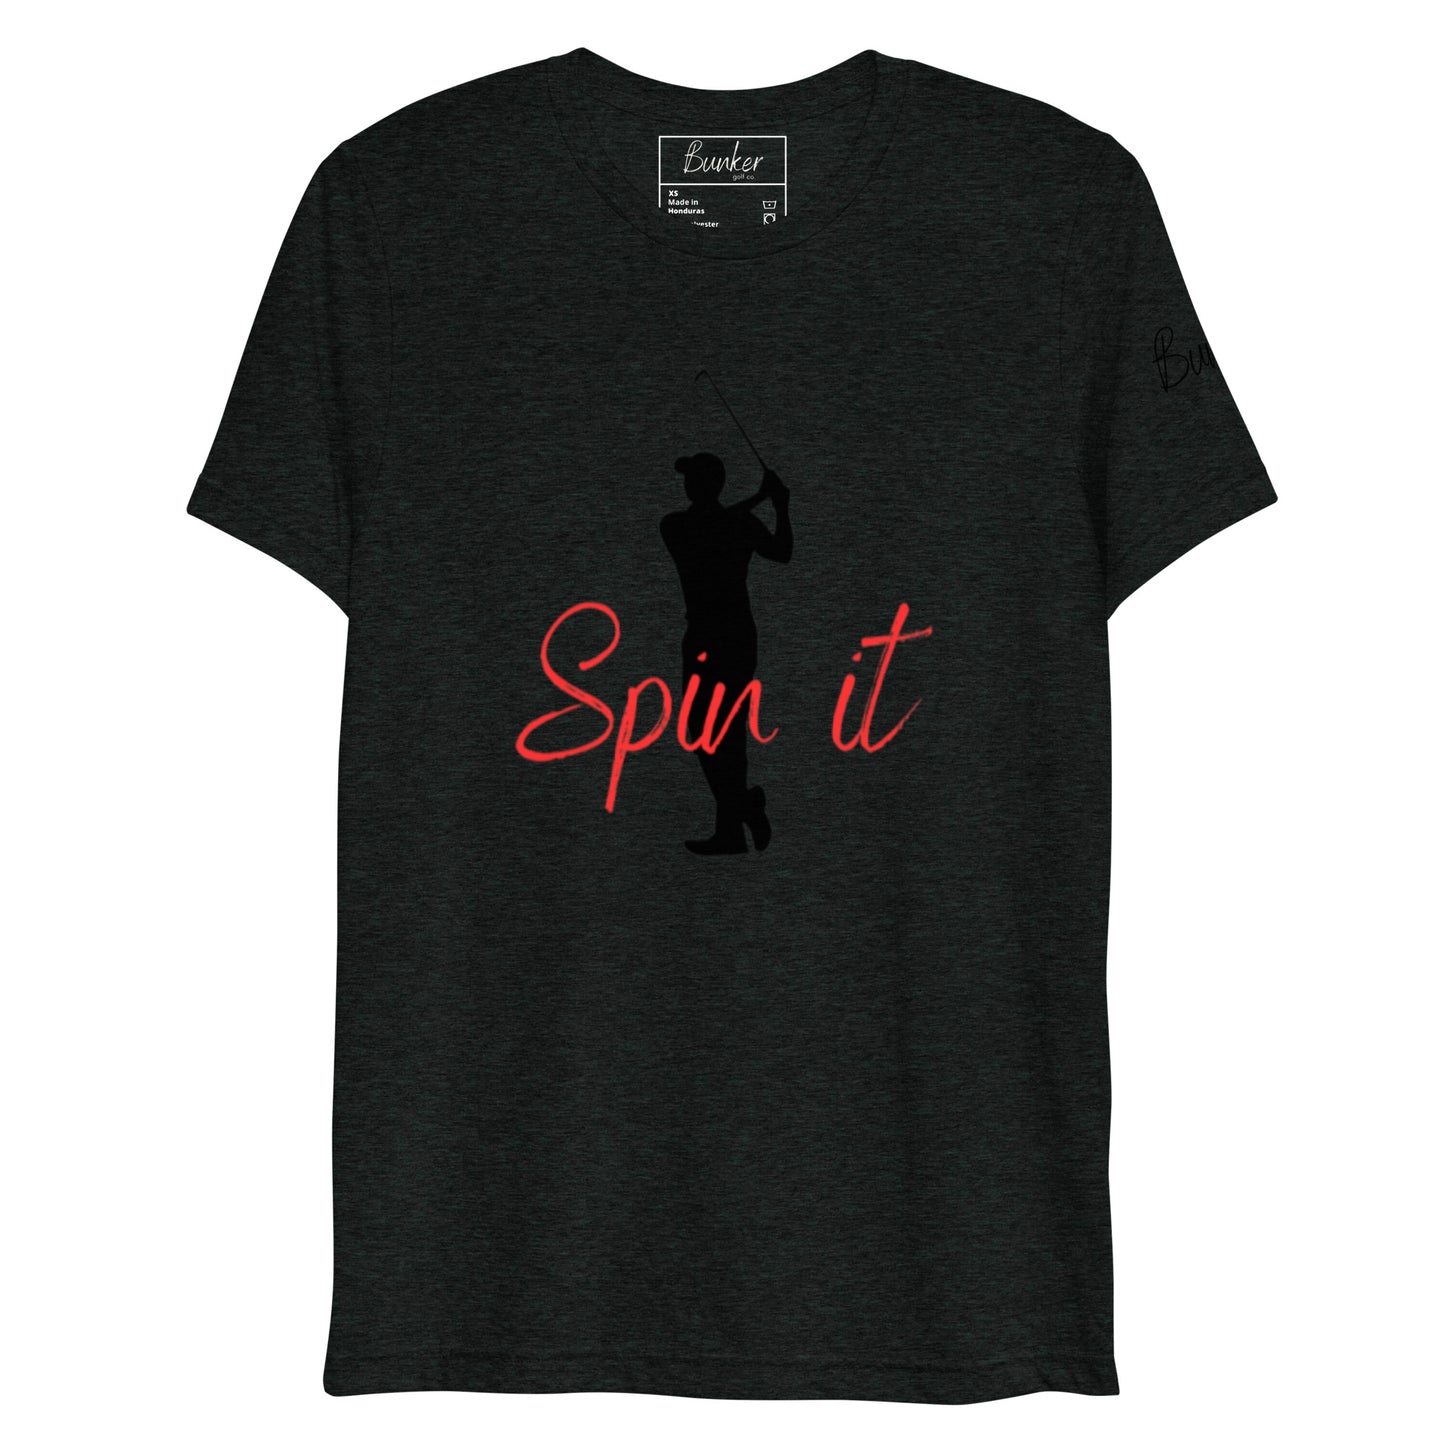 Bunker Spin it Short sleeve t-shirt